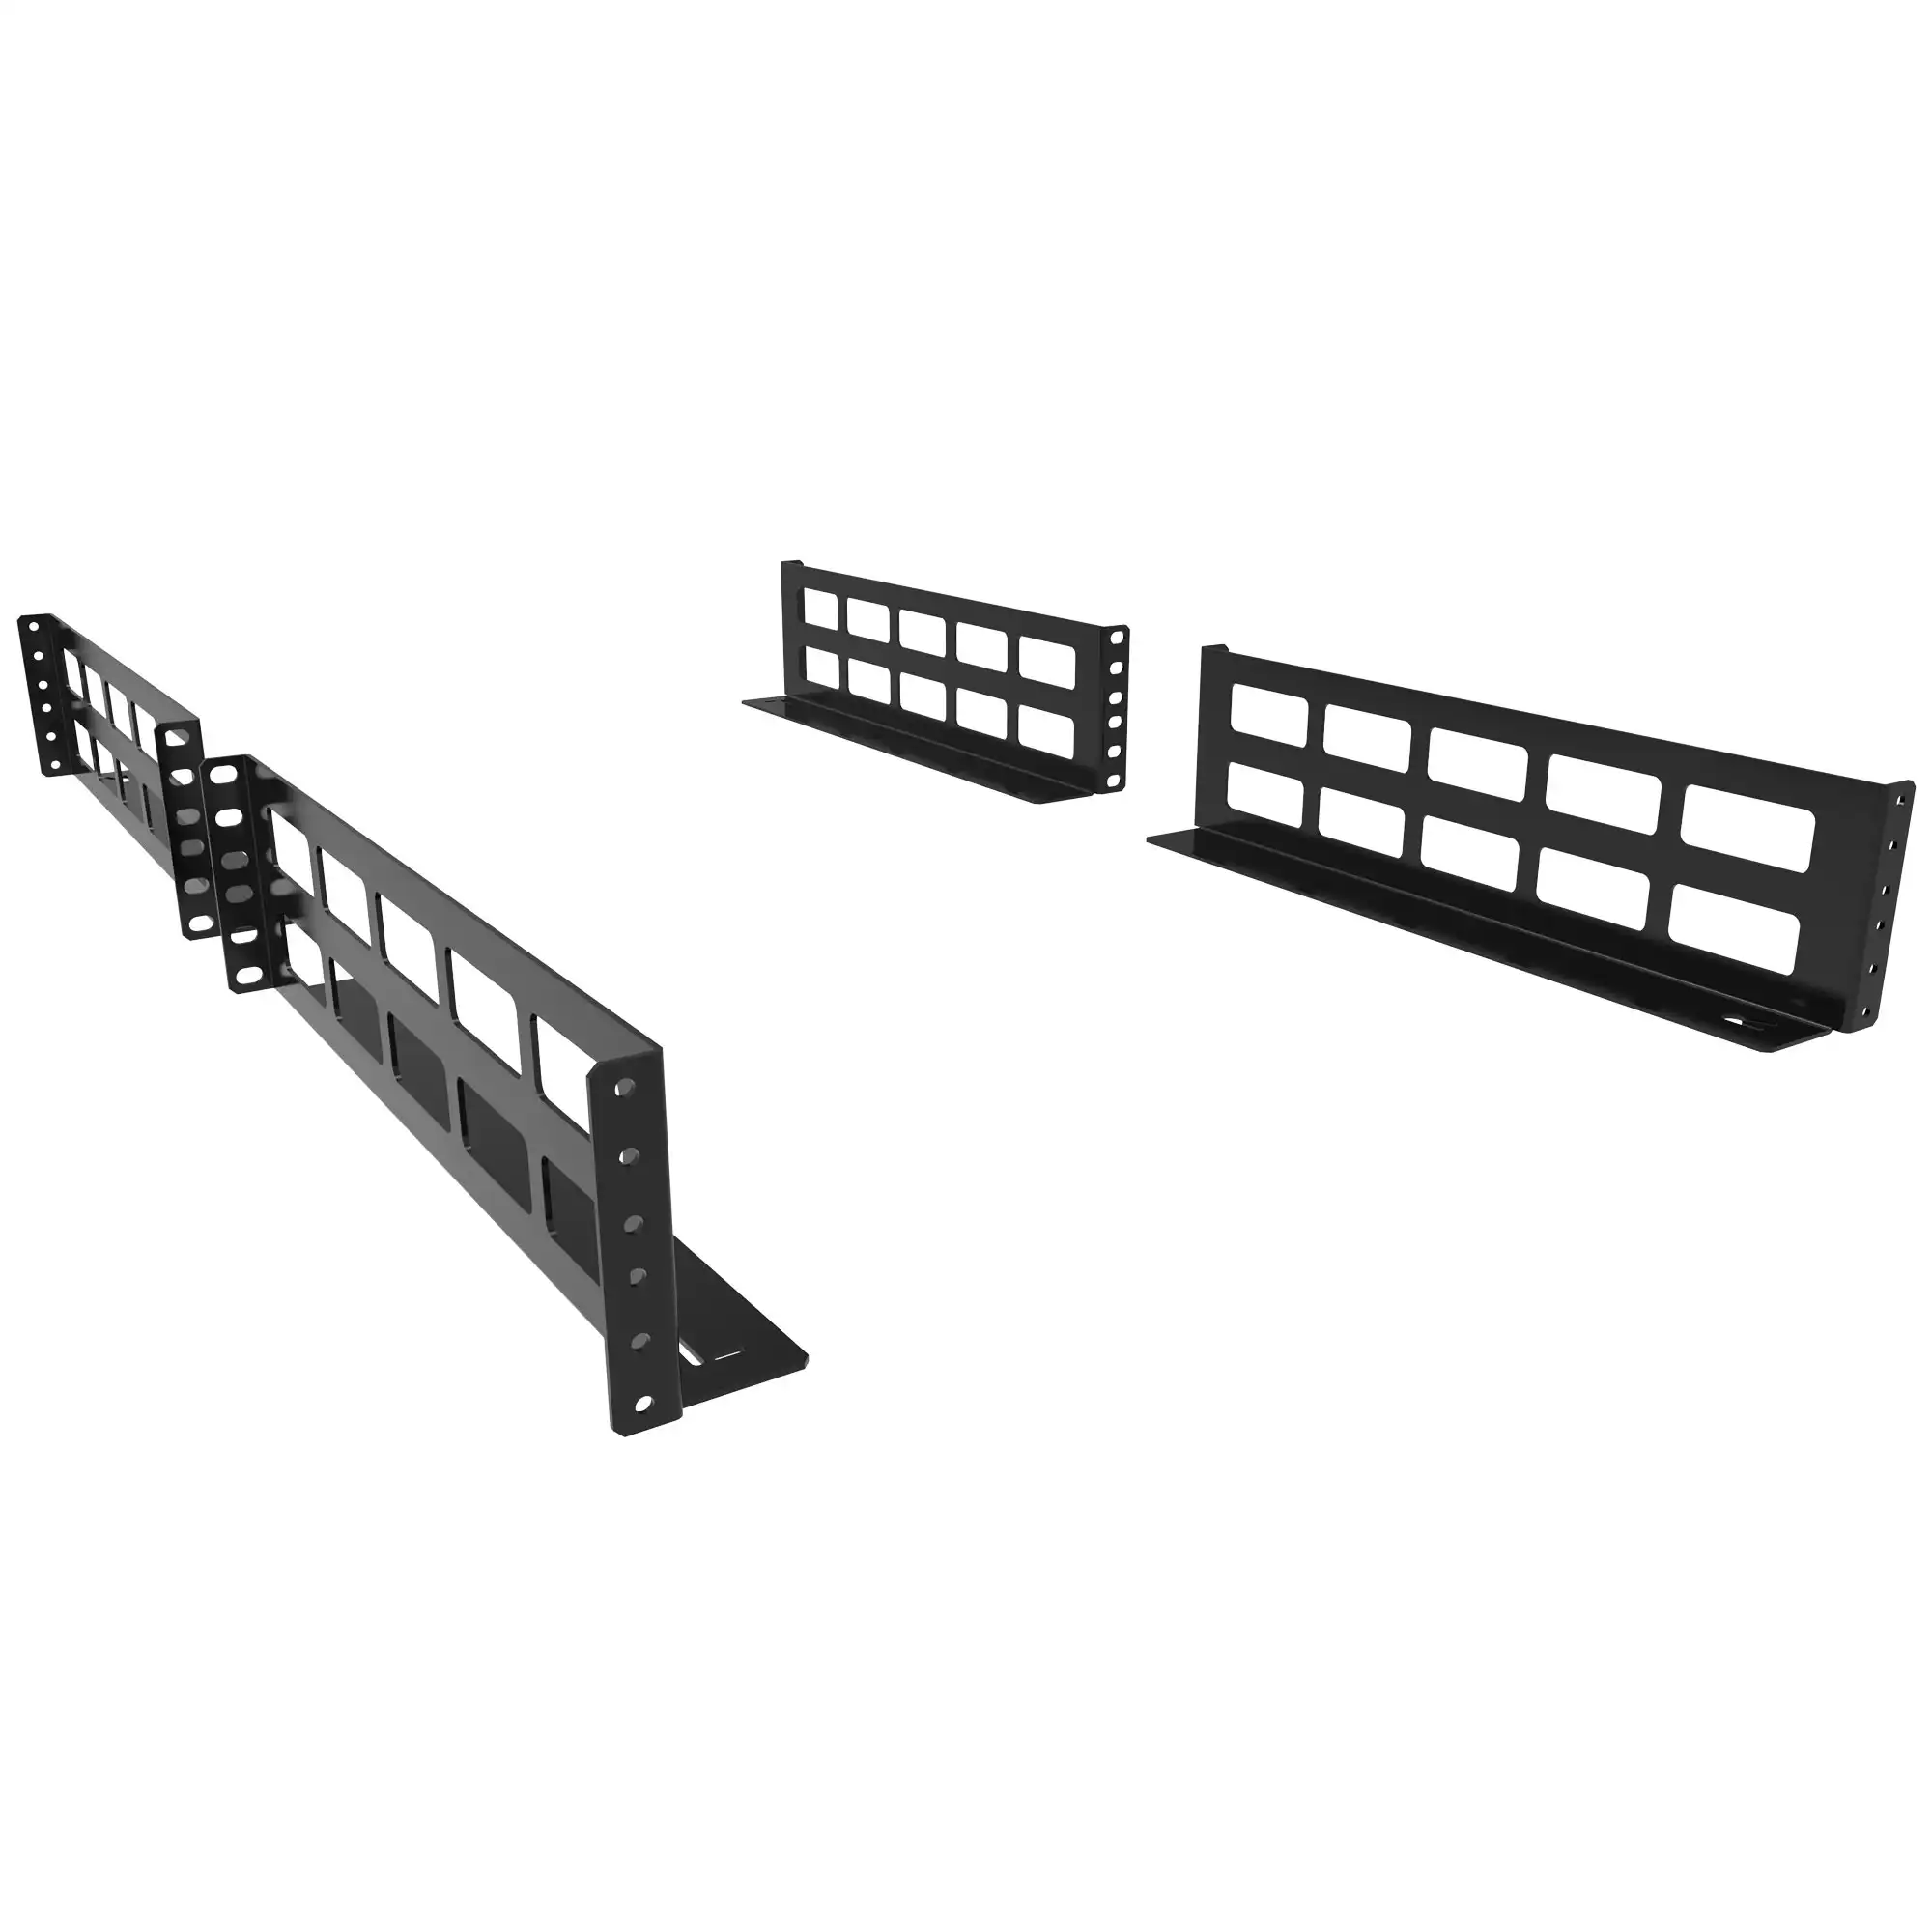 RDAB Series - Hammond Manufacturing Rack Systems at KGA Enclosures Ltd